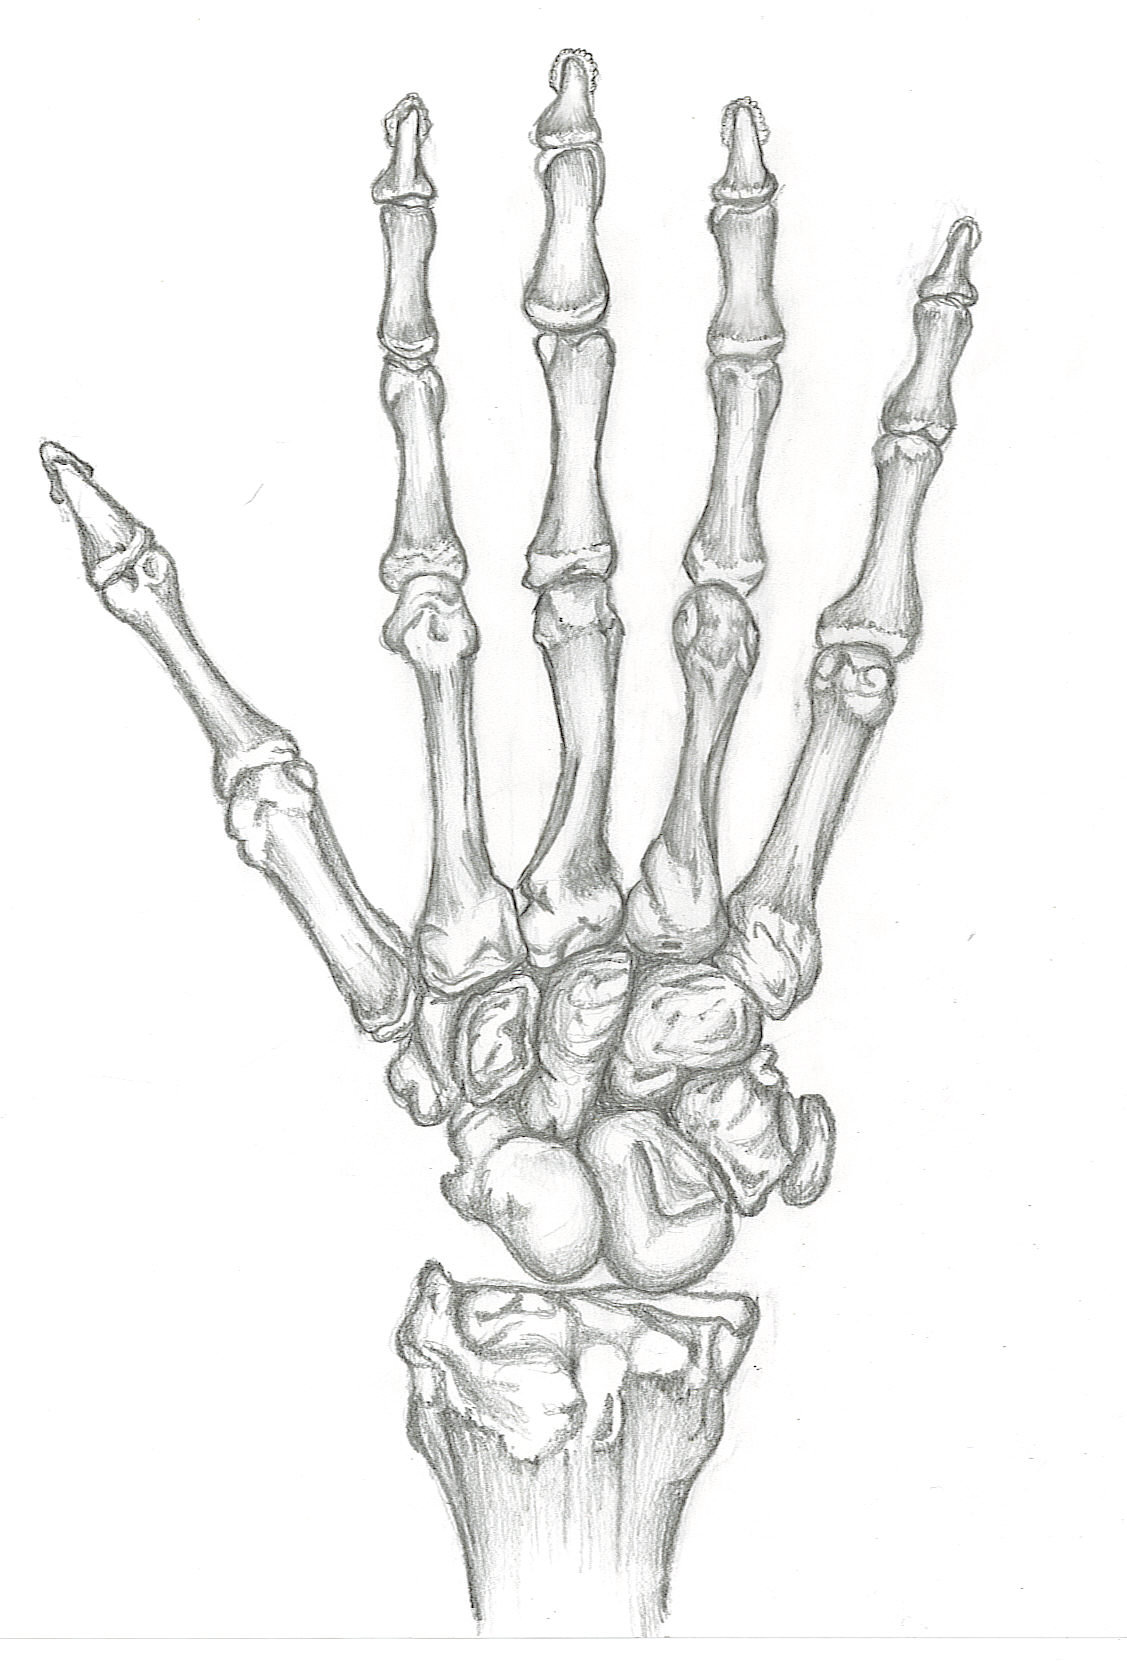 Download Skeletal Hand Drawing at GetDrawings.com | Free for ...